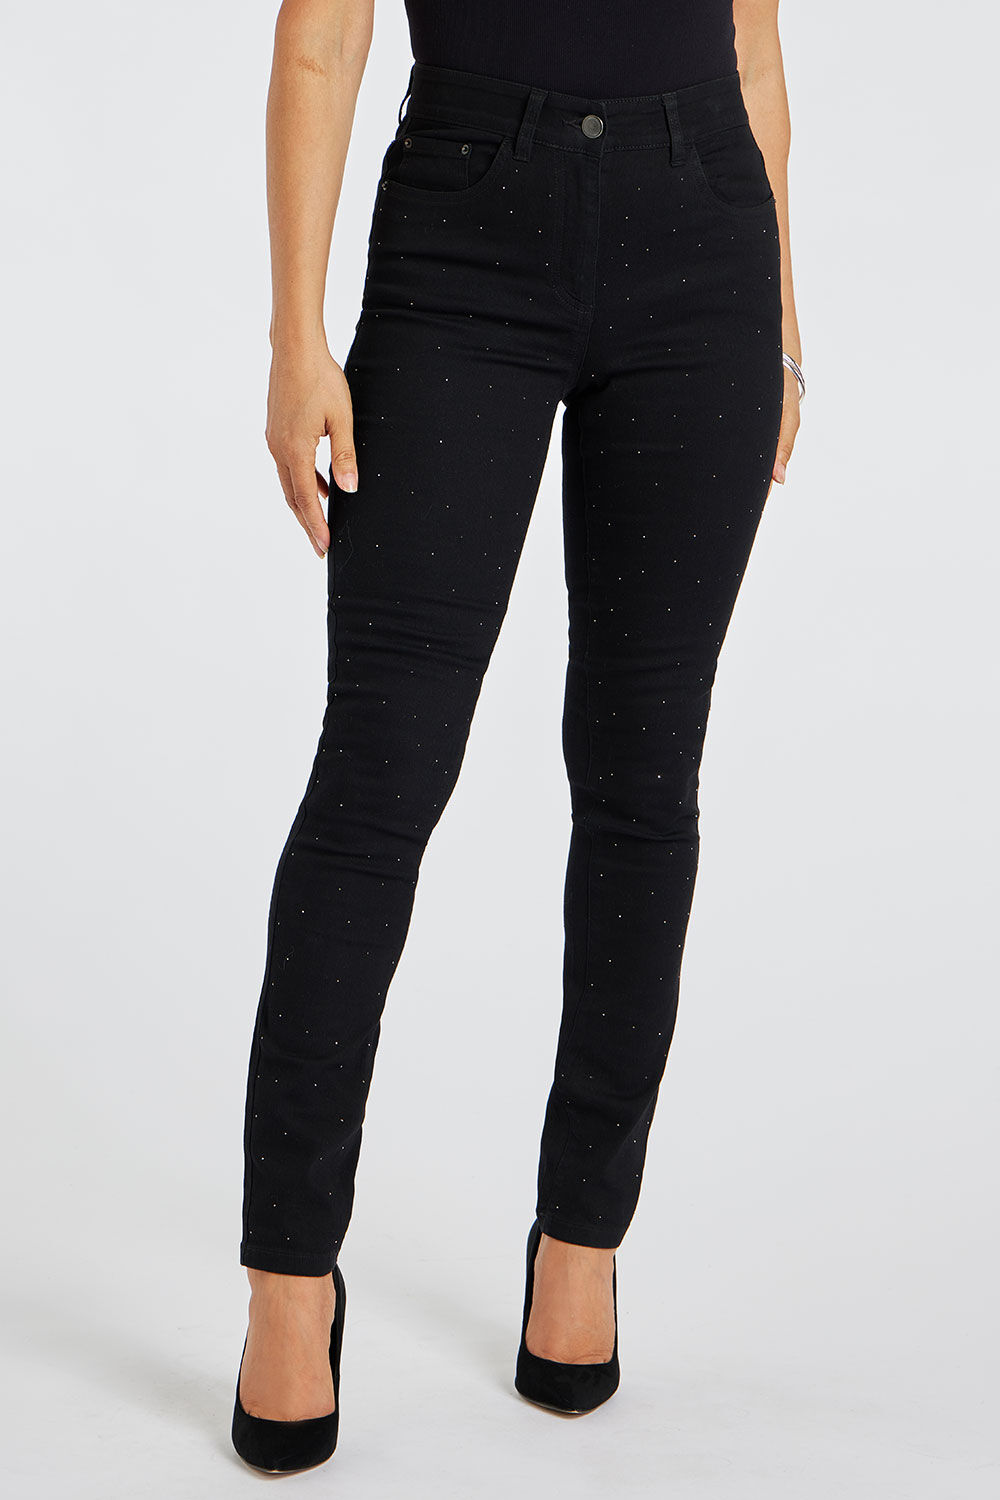 Bonmarche Black The Susie Embellished Front Slim Leg Jeans, Size: 12